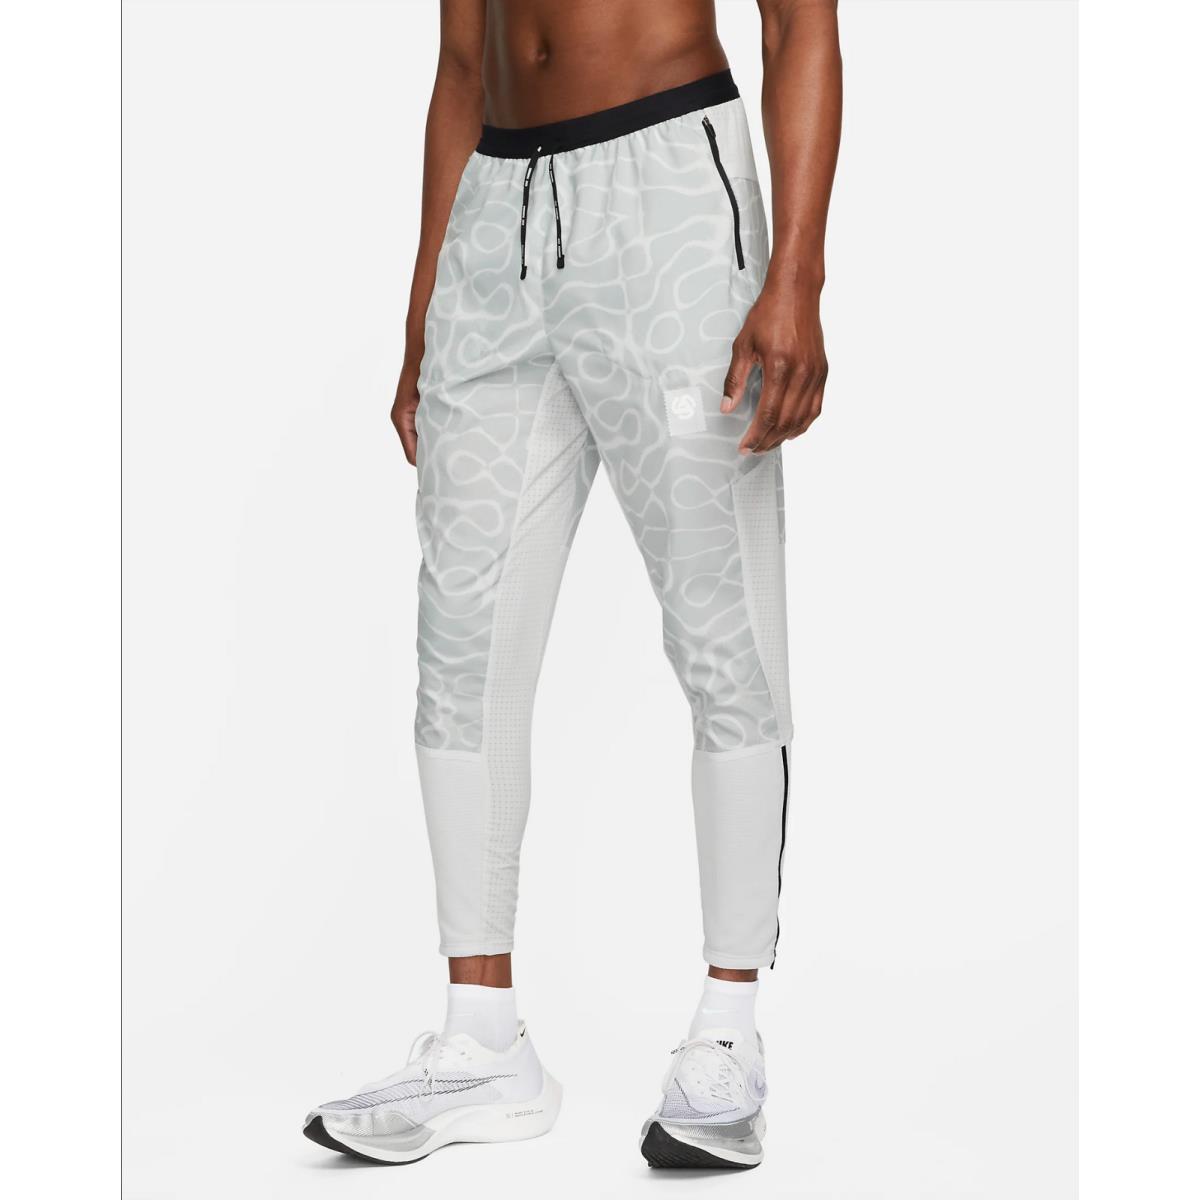 Nike Wild Run Phenom Elite Men Woven Graphic Running Pants White DM4574